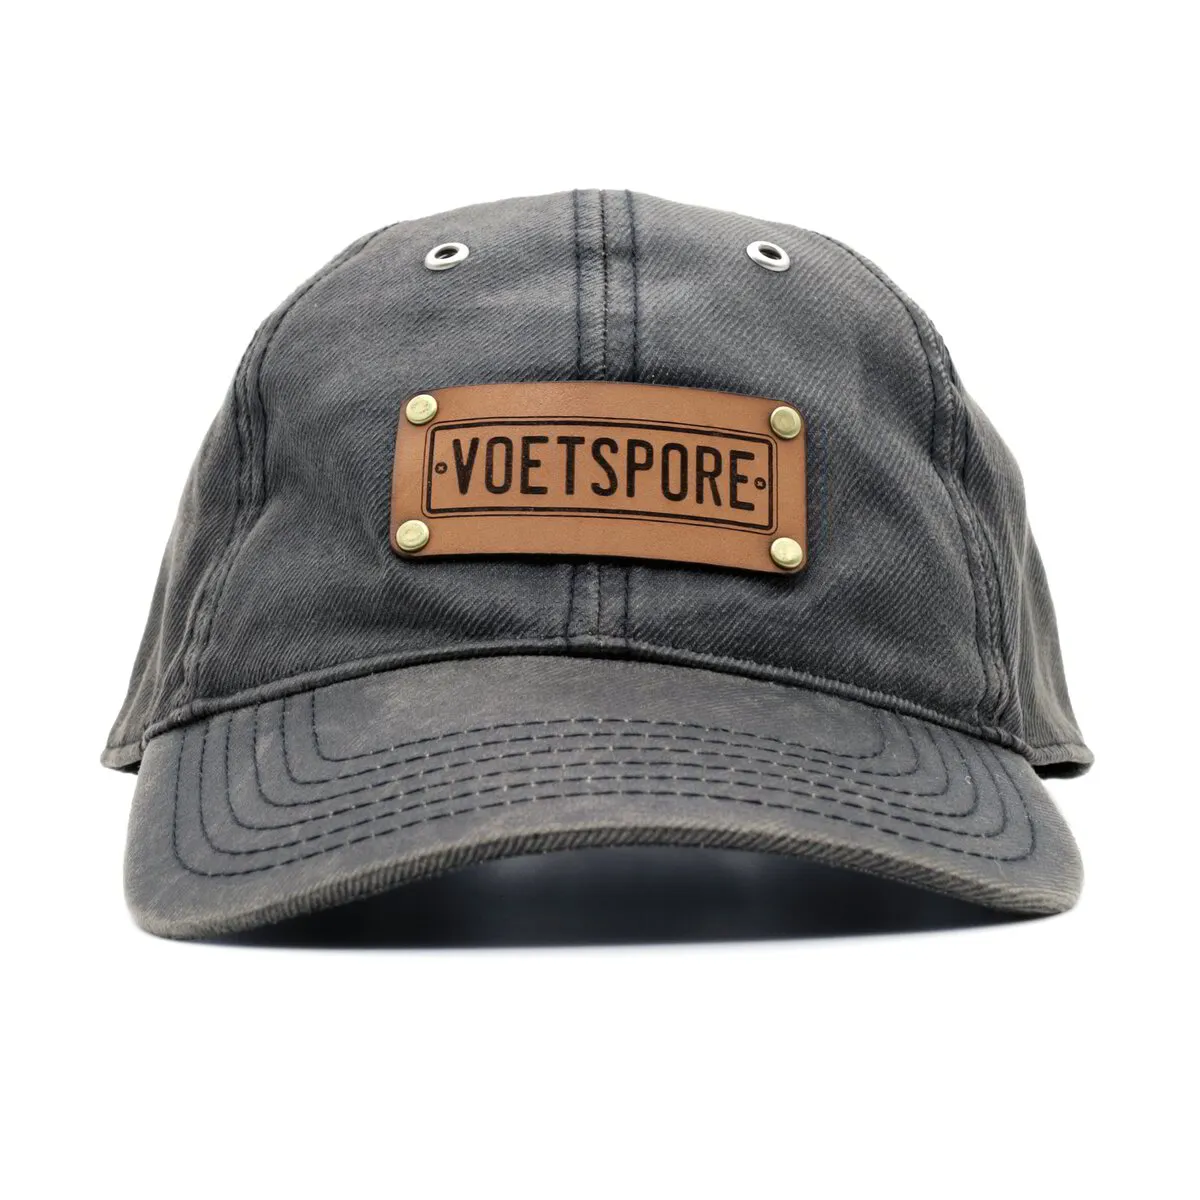 Voetspore Grey Cap with Leather